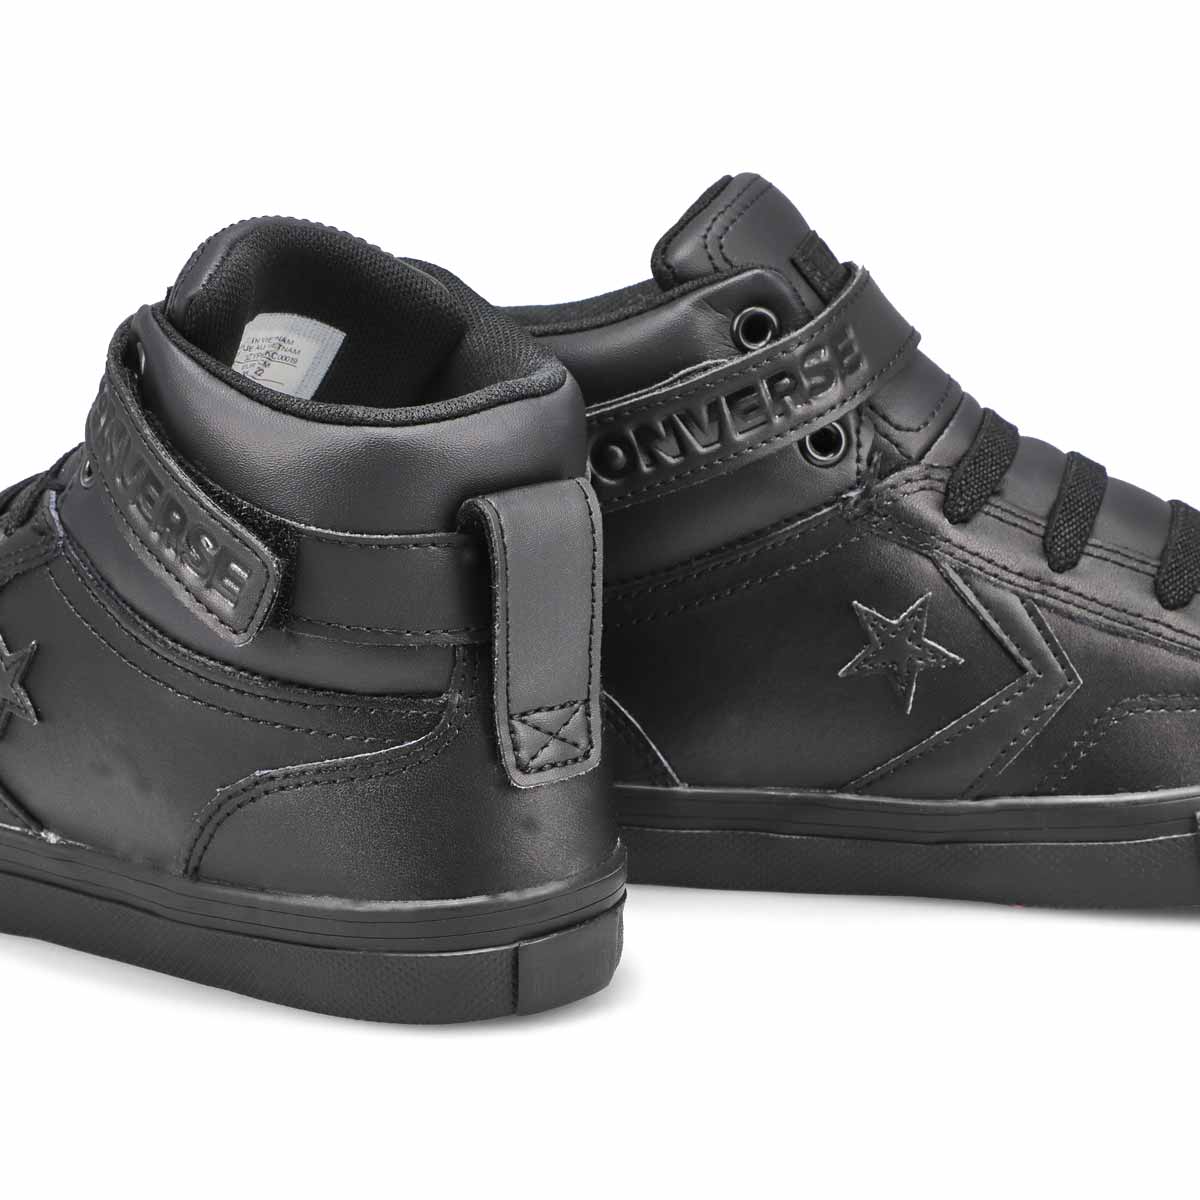 Boys' Chuck Taylor All Star Pro Blaze Strap Leather Sneaker - Black/Black